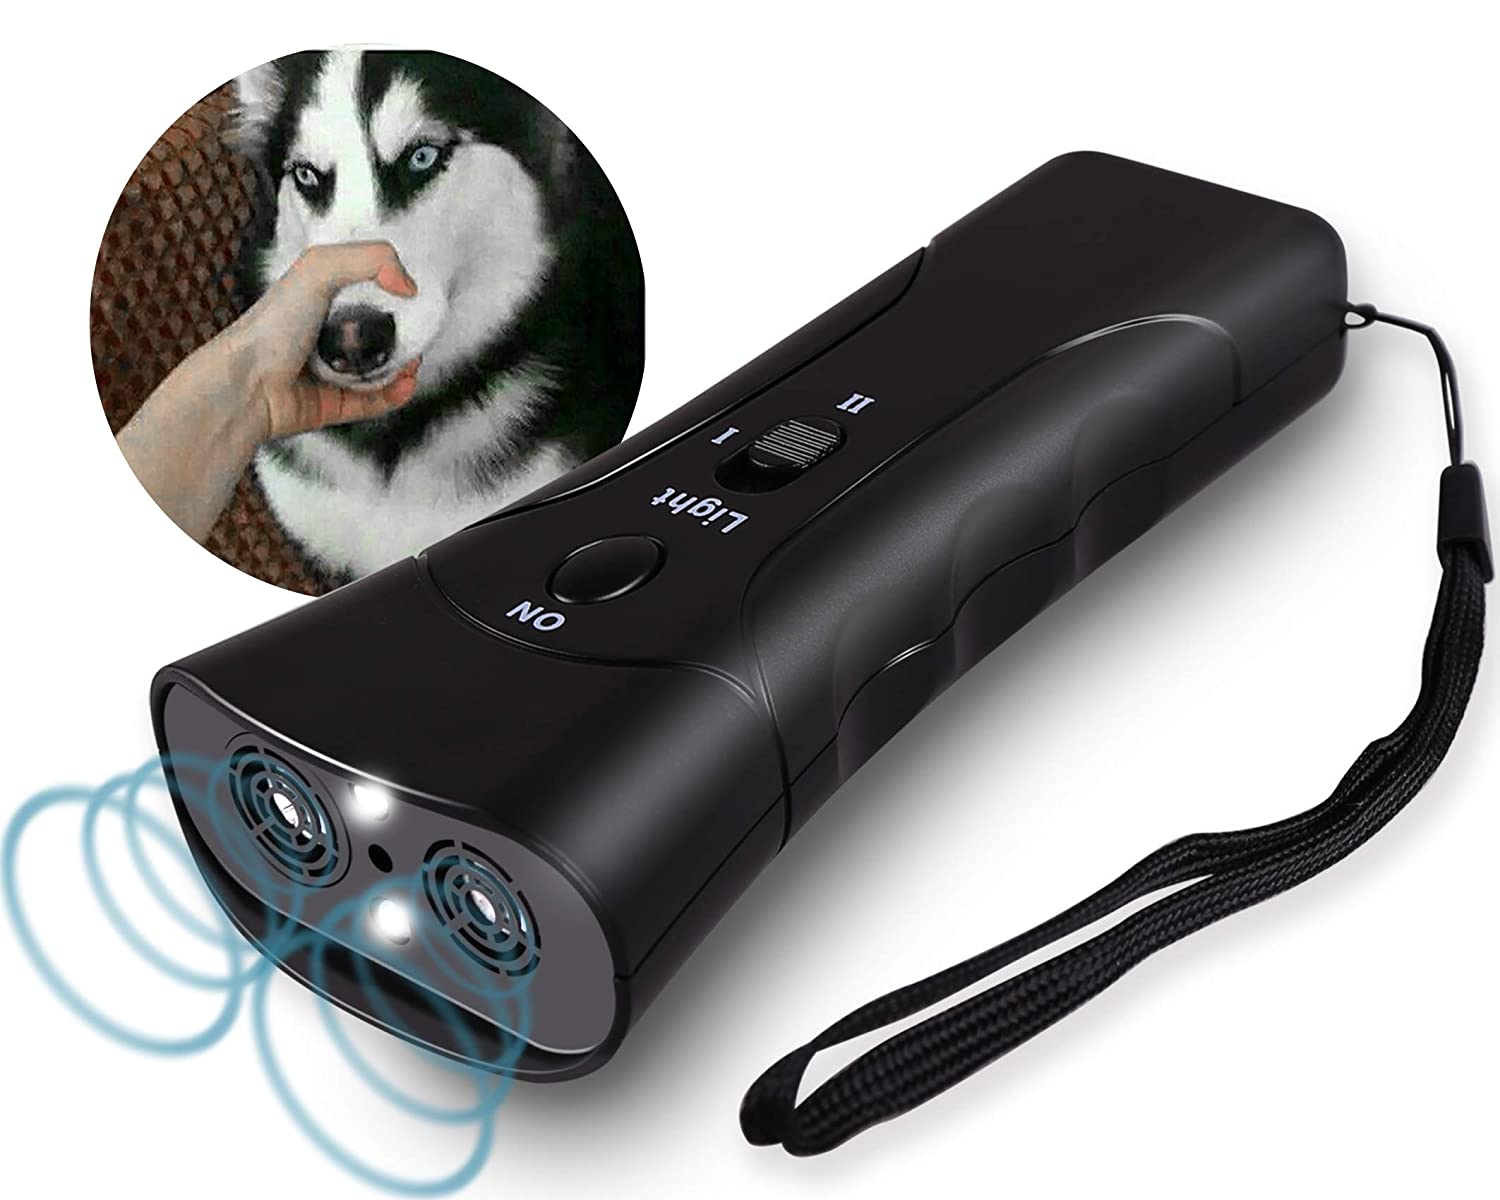 Ultrasonic Dog Sound Deterrent